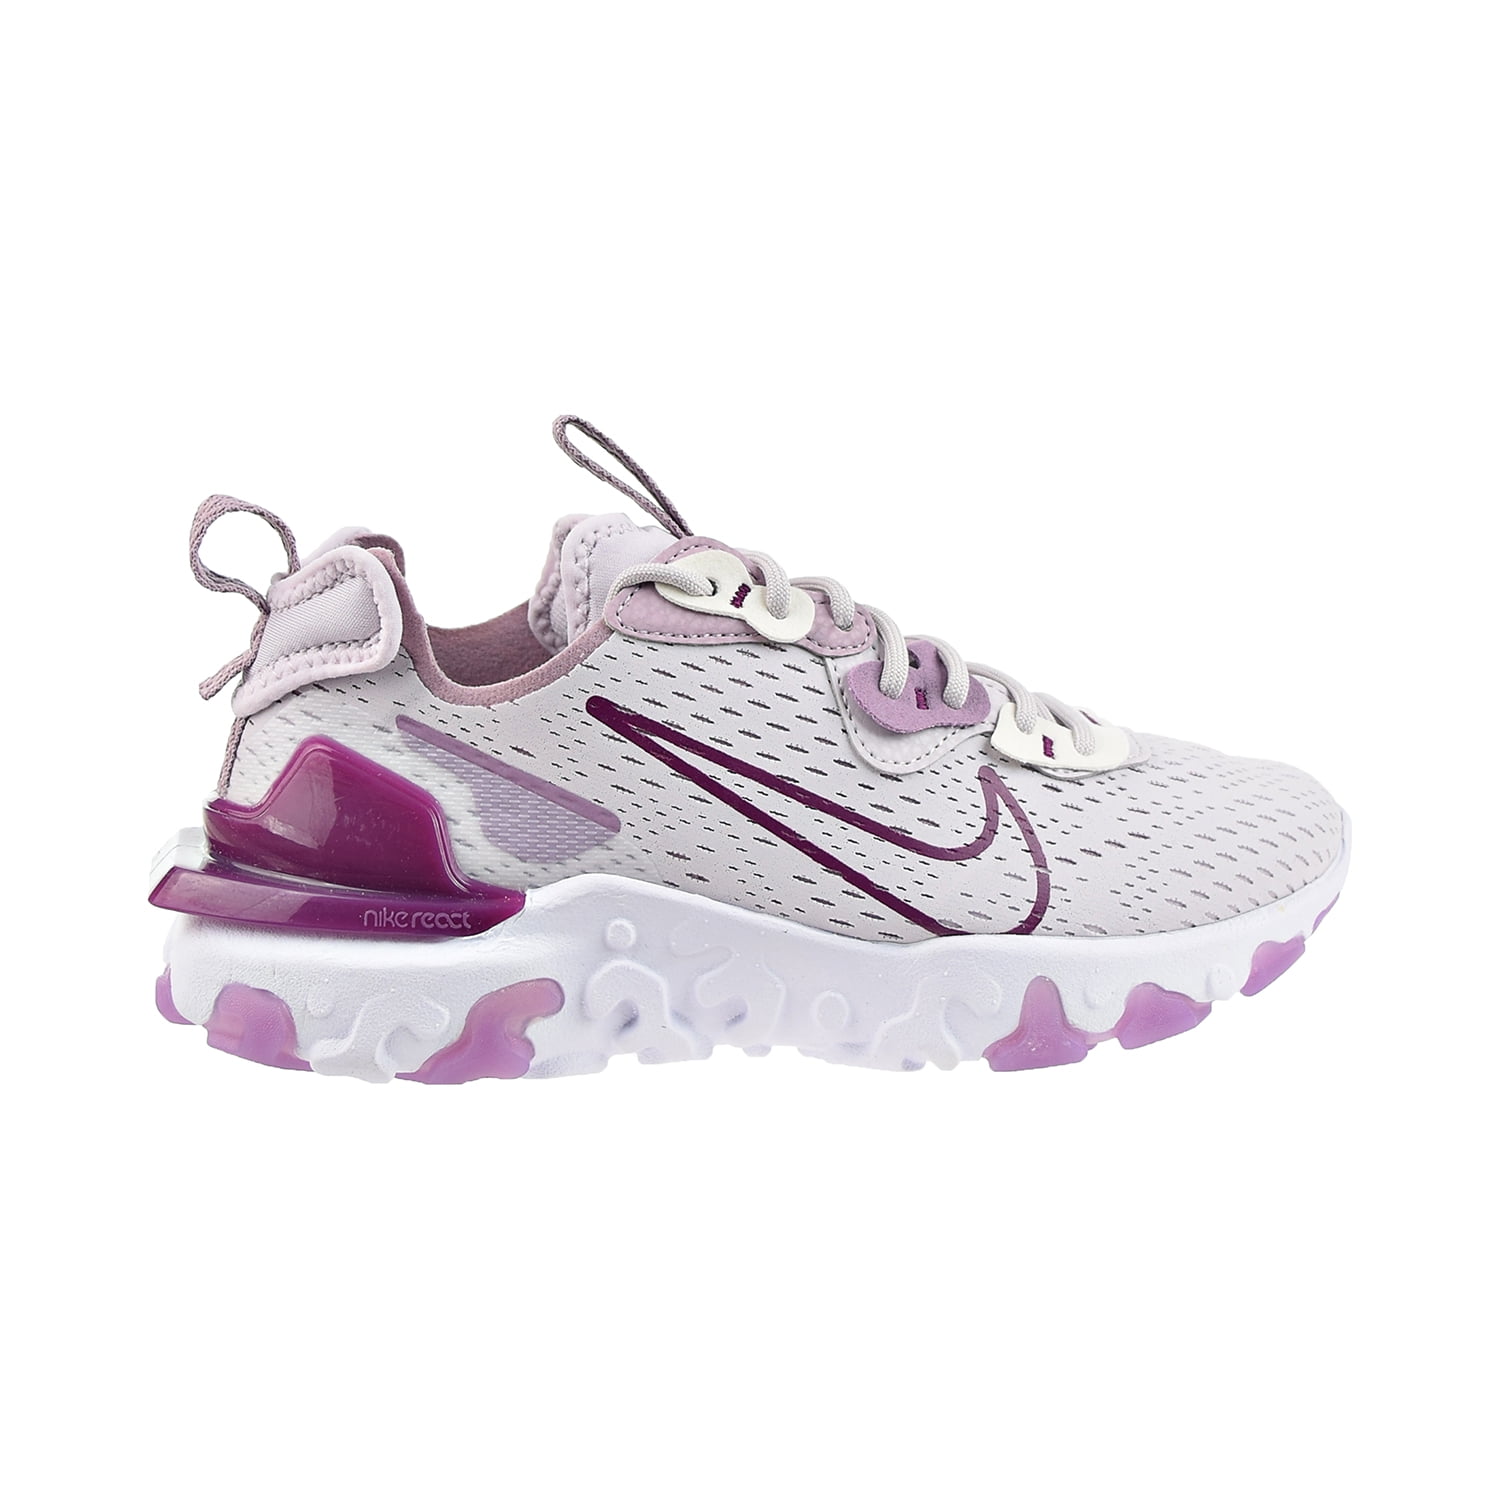 Gunst thee hop Nike React Vision Women's Shoes Venice/Sangria-Amethyst Wave ci7523-500 -  Walmart.com